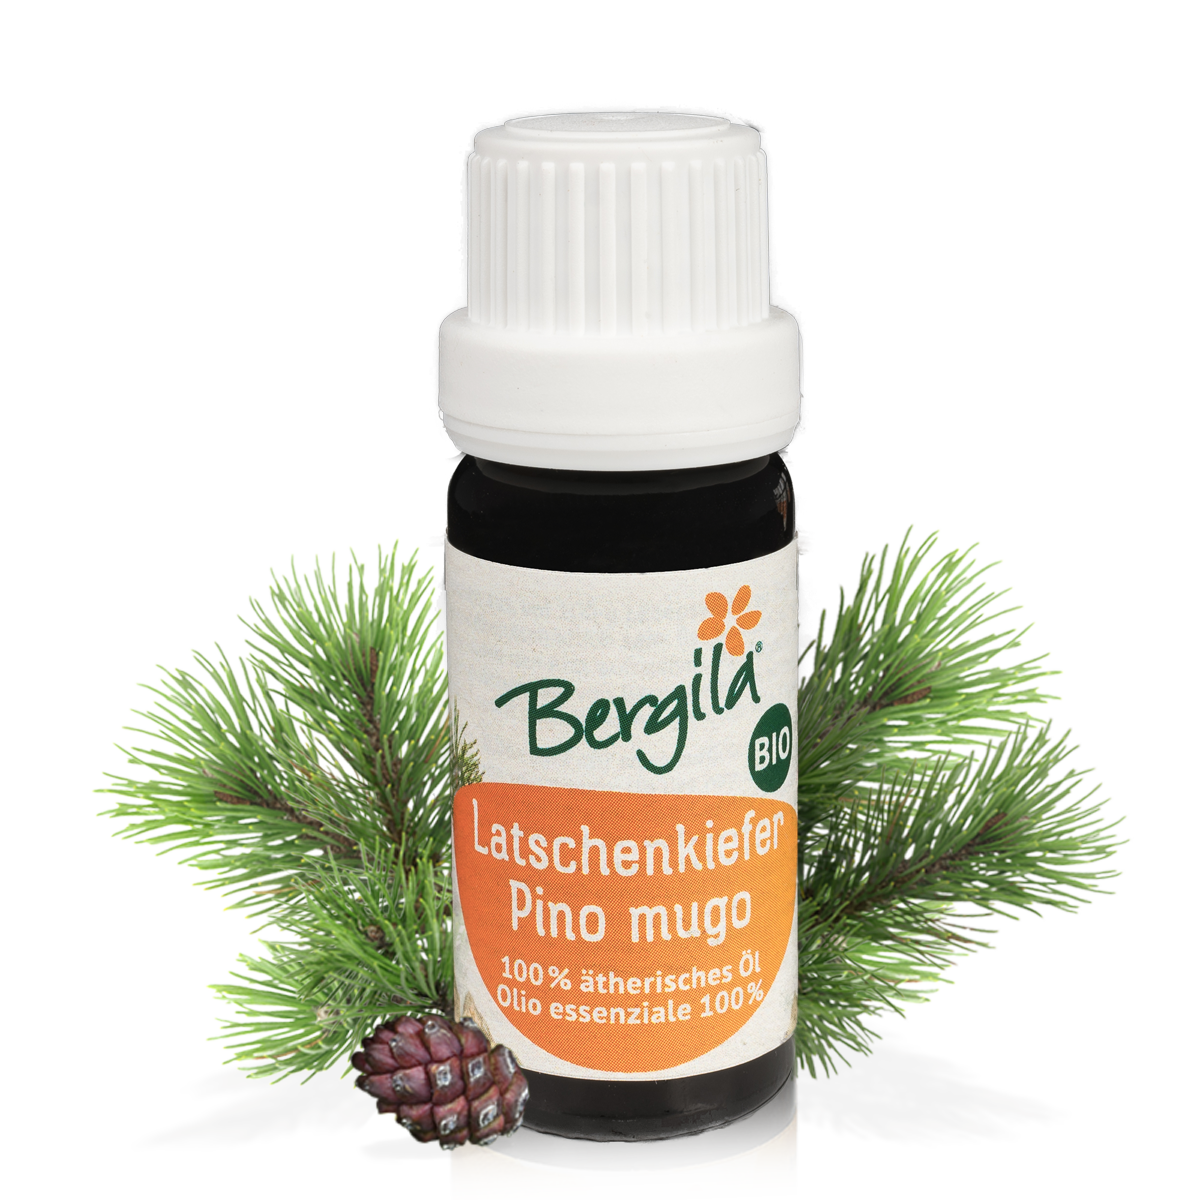 Mountain pine organic essential oil